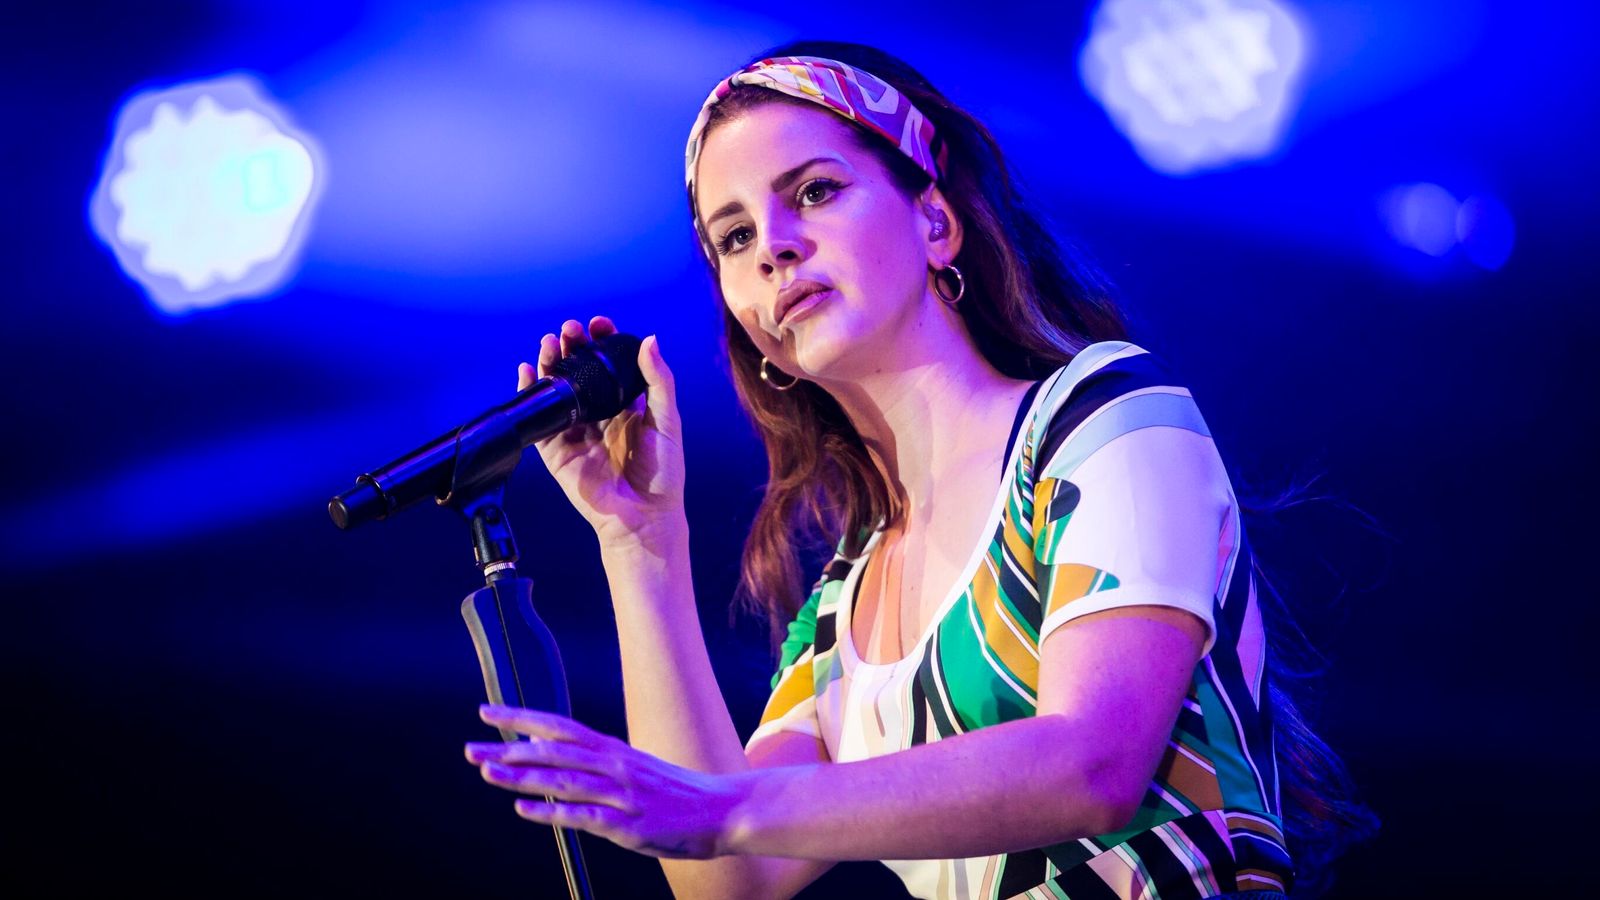 Lana Del Rey says sorry for truncated Glastonbury show - BBC News